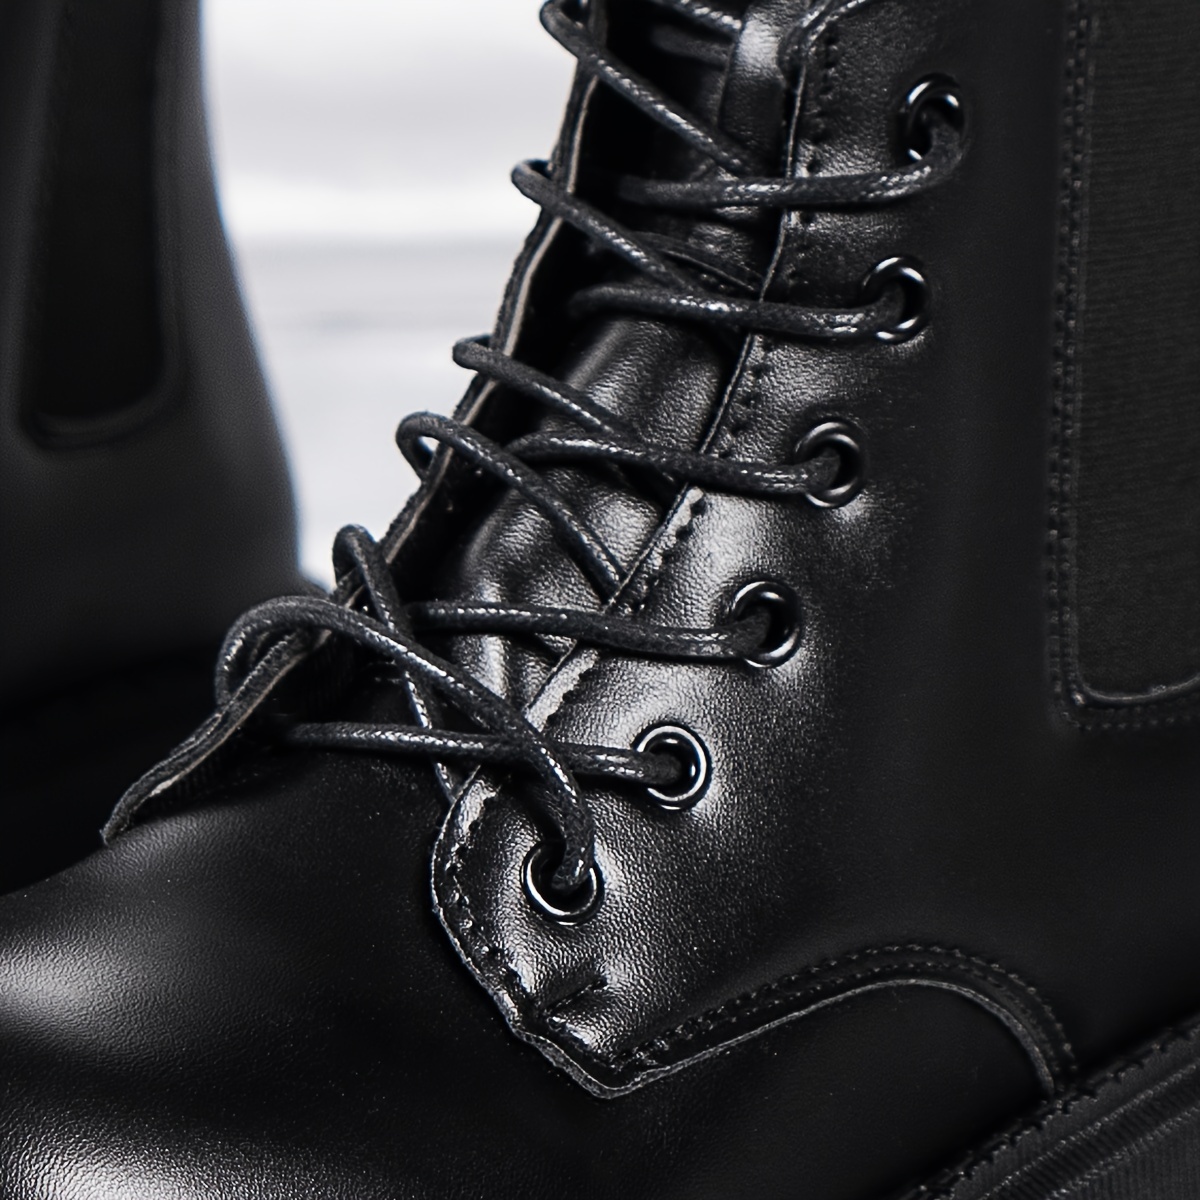 Men's Designer Leather Combat, Chelsea, Ankle Boots